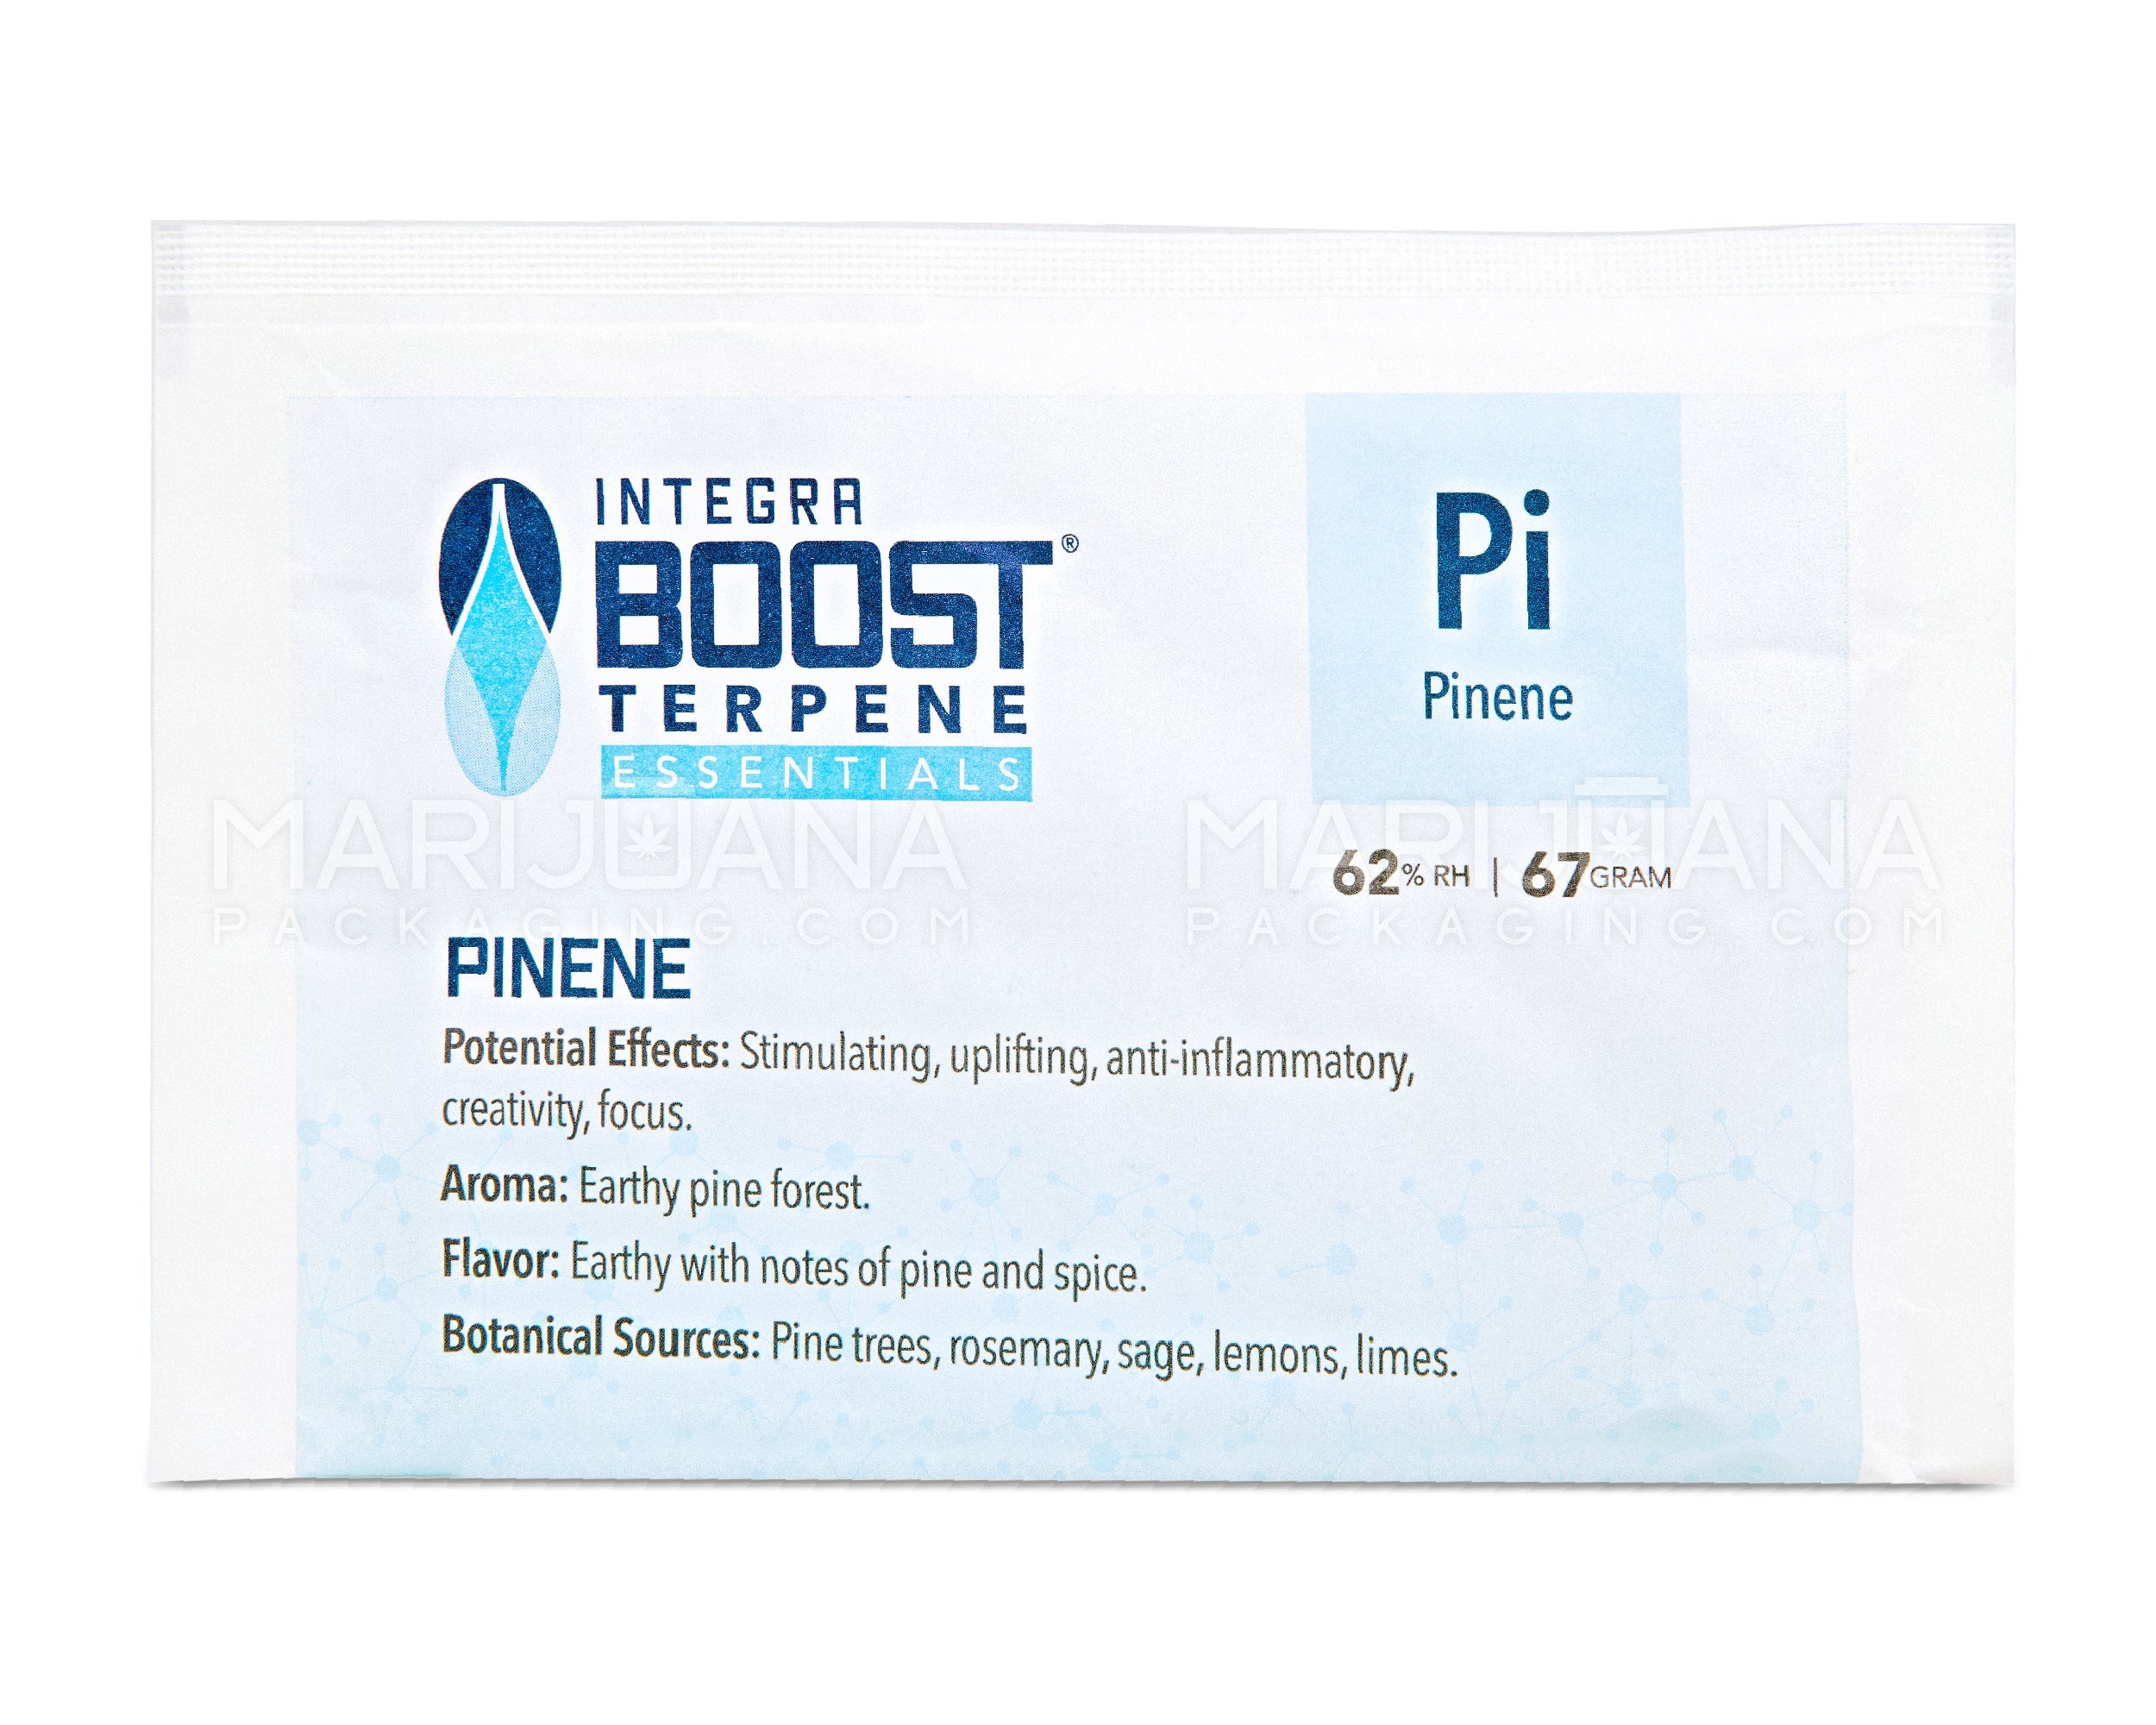 INTEGRA Boost Terpene Essentials Pinene Humidity Pack | 67 Grams - 62% | Sample - 1